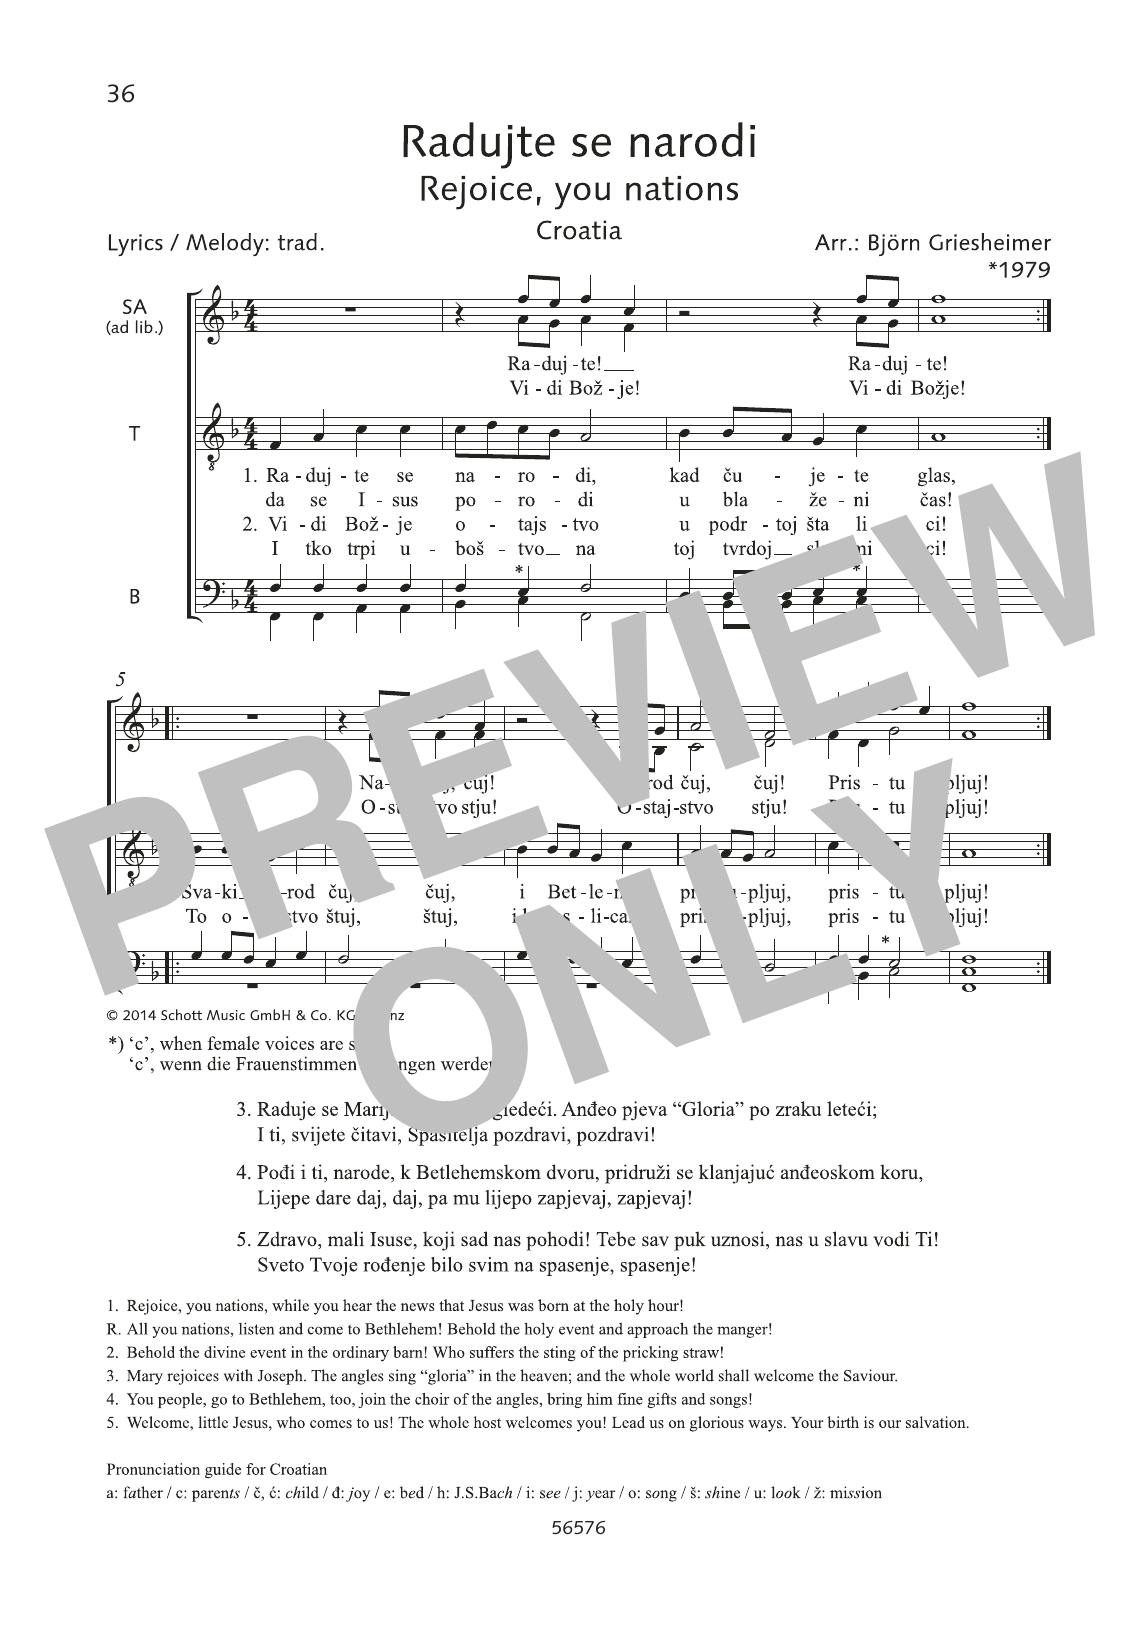 Download Björn Griesheimer Radujte se narodi Sheet Music and learn how to play Choir PDF digital score in minutes